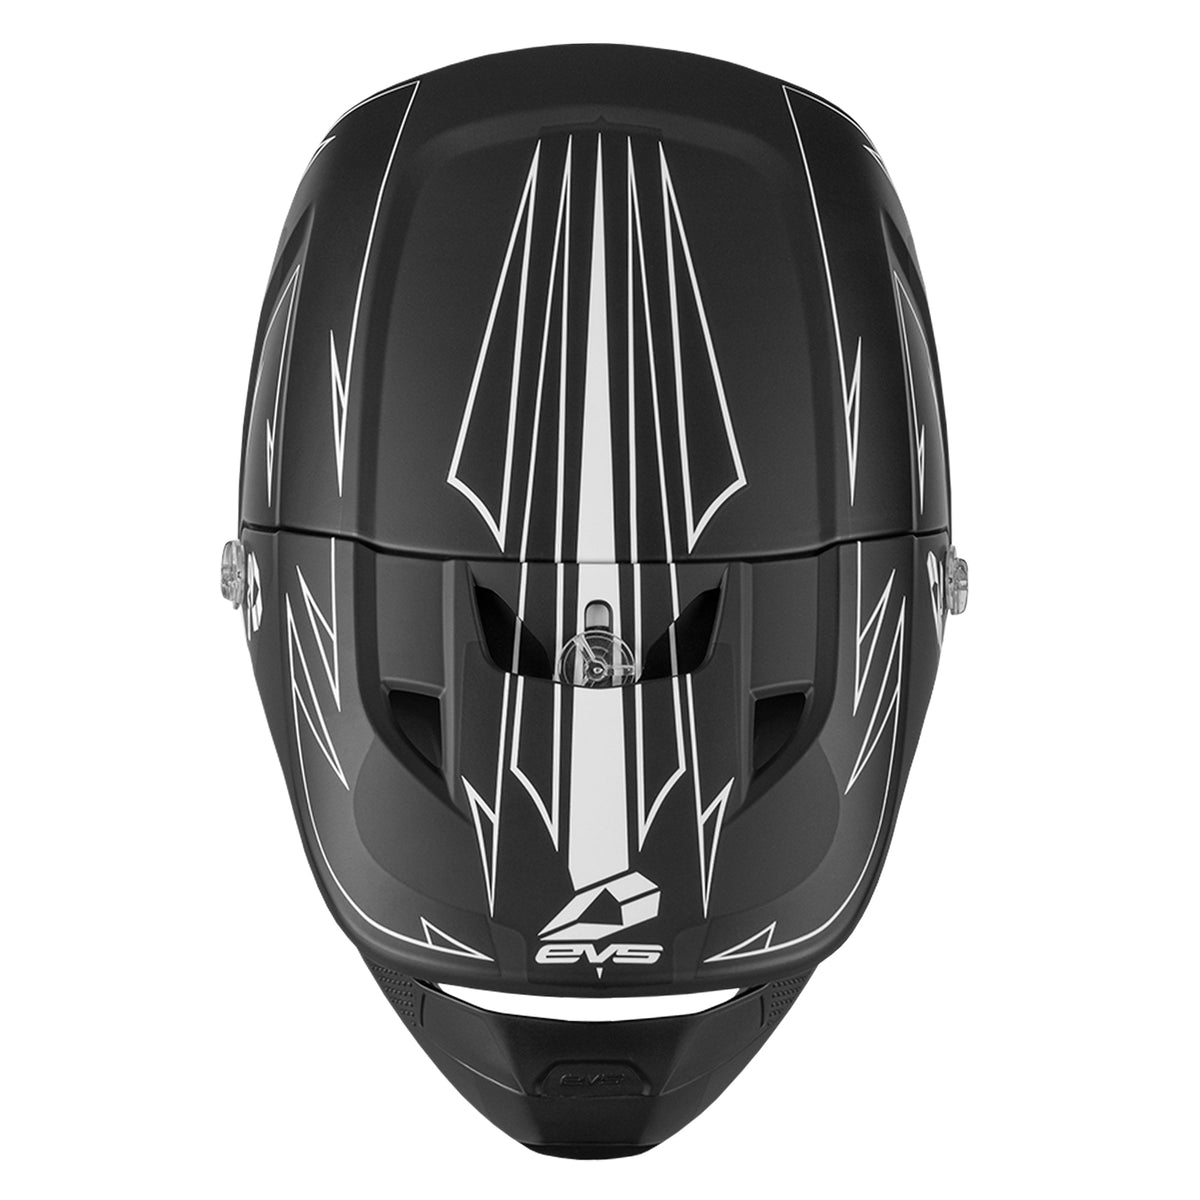 T3 Youth Helmet - Pinner Matte Black - EVS Sports